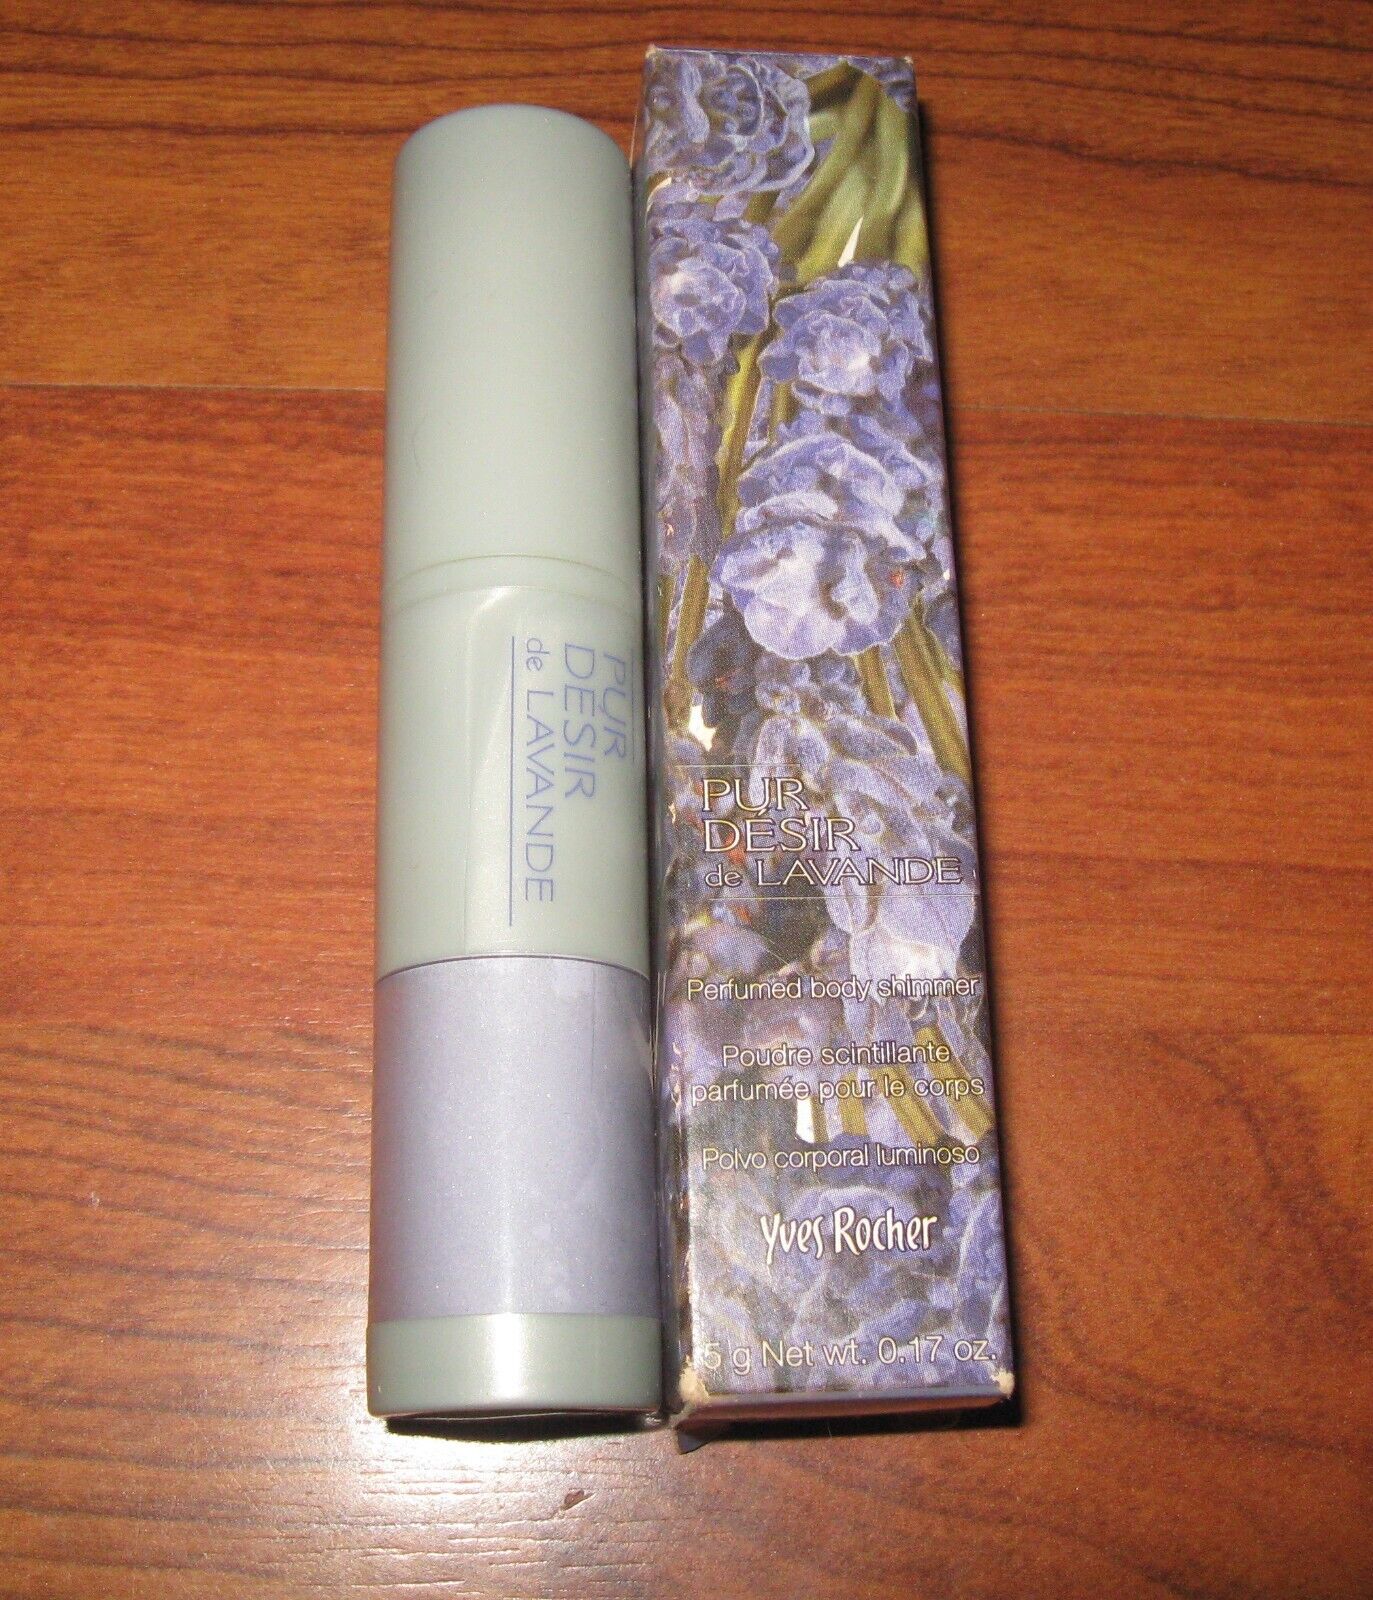 VINTAGE YVES ROCHER PUR DESIR de LAVANDE Lavender Perfumed Body Shimmer .17 oz